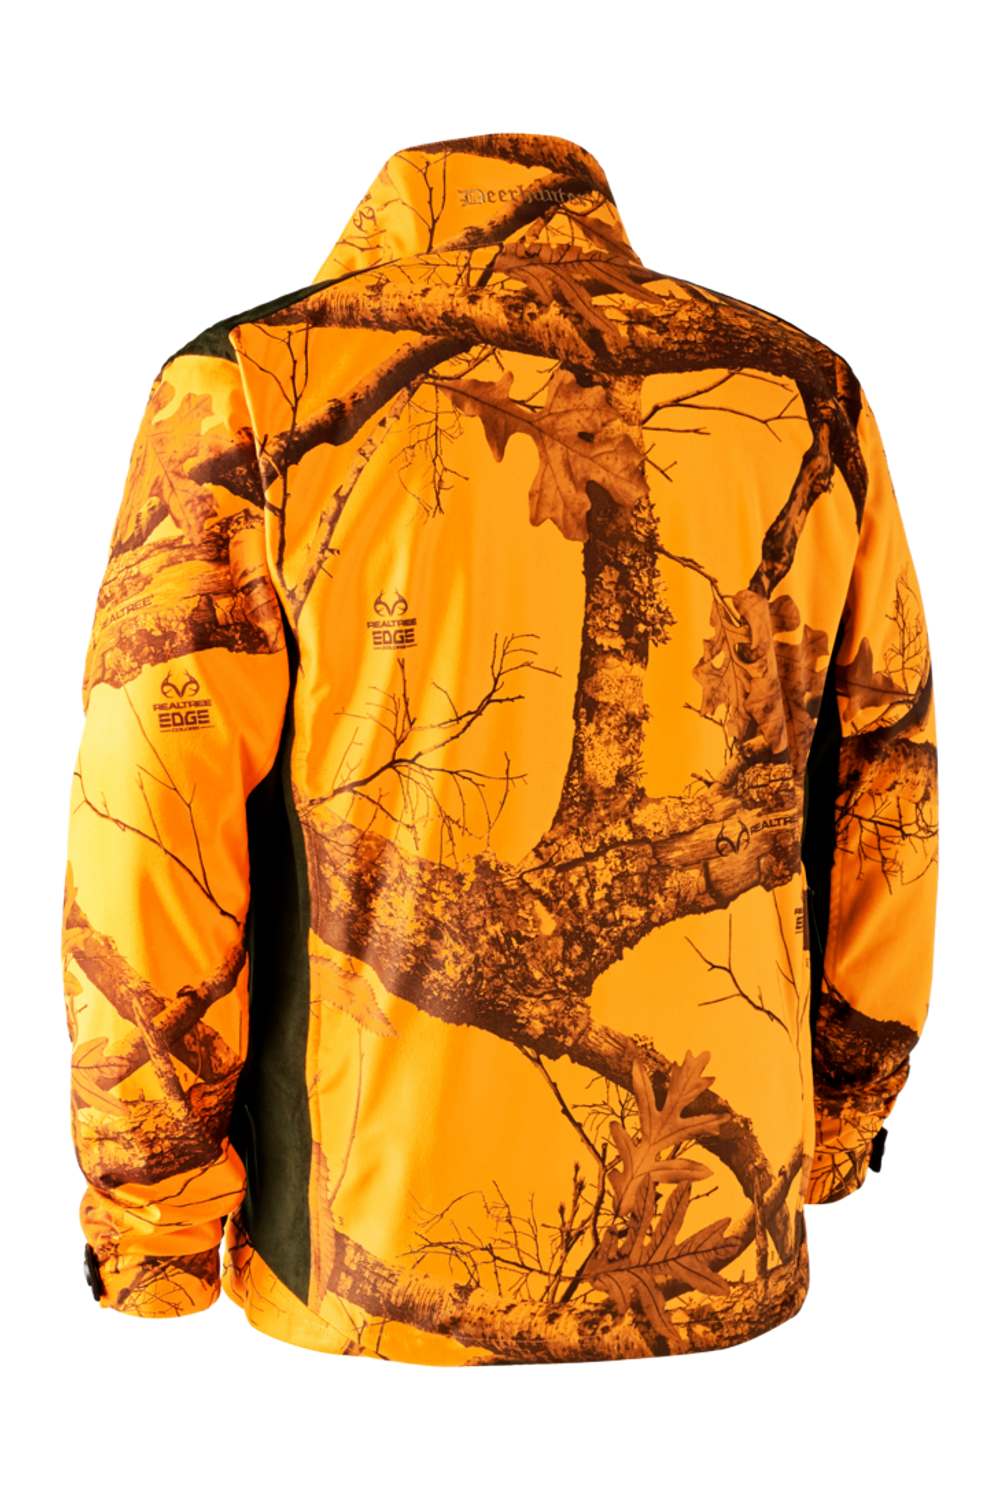 Deerhunter Explore Jacket in Realtree Edge Orange 